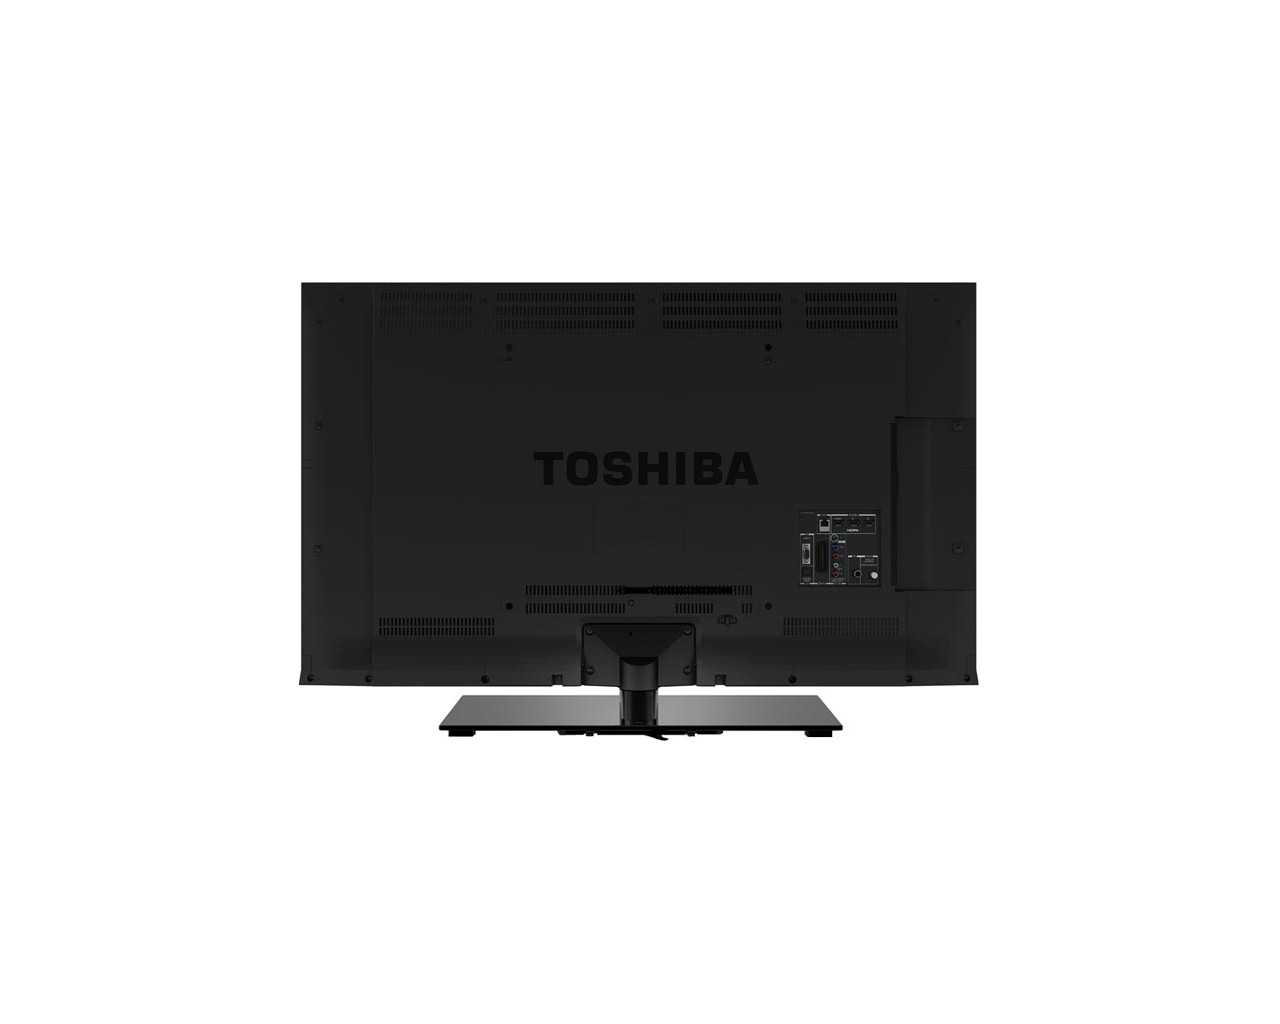 Жк-телевизор toshiba 46tl838r в москве. купить жк-телевизор toshiba 46tl838r. цены на жк-телевизор toshiba 46tl838r. где купить жк-телевизор toshiba 46tl838r?